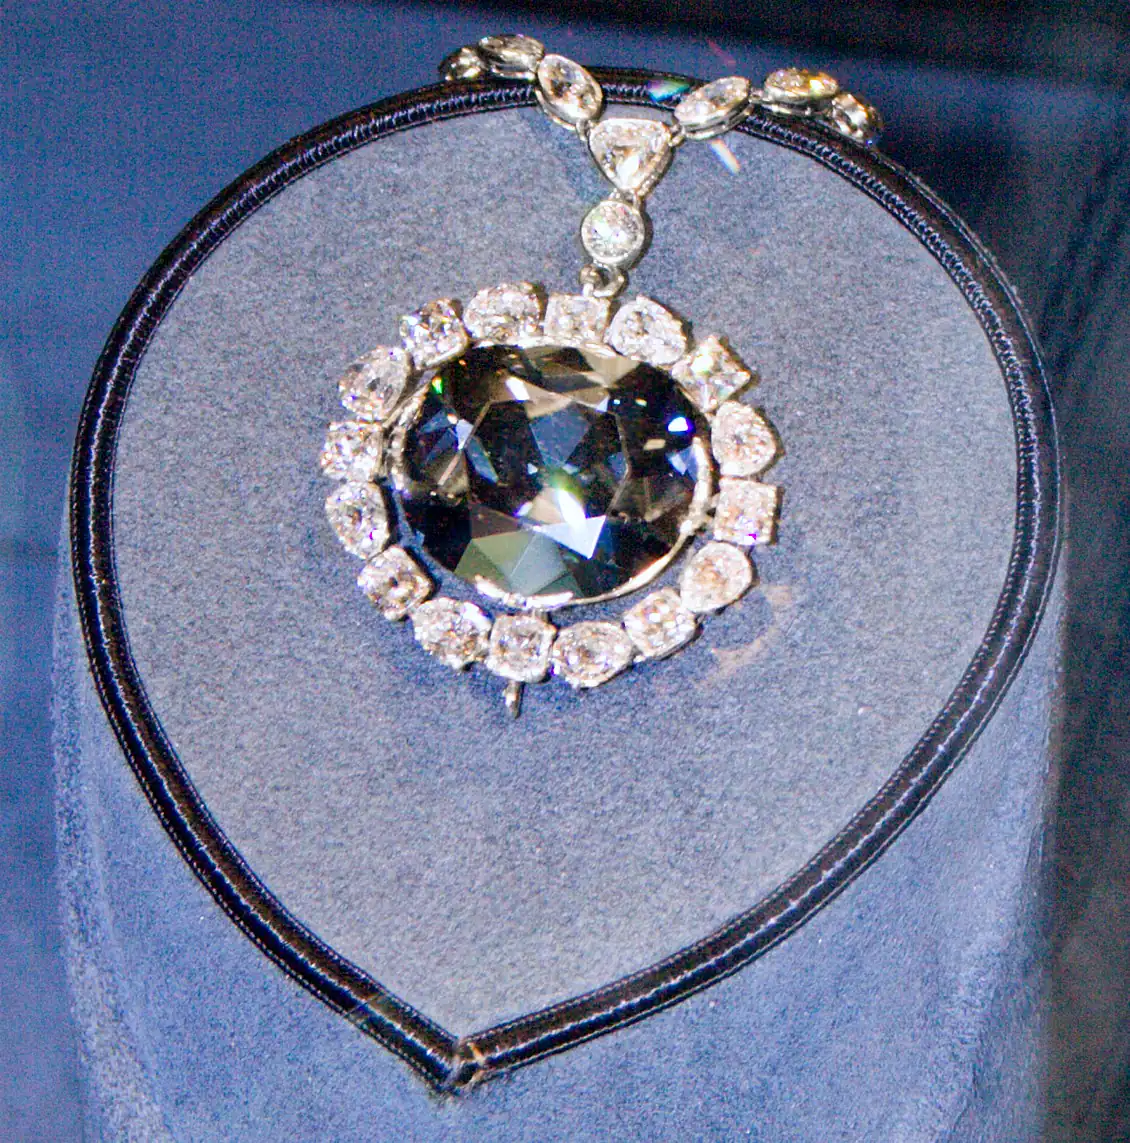 The Hope Diamond Necklace